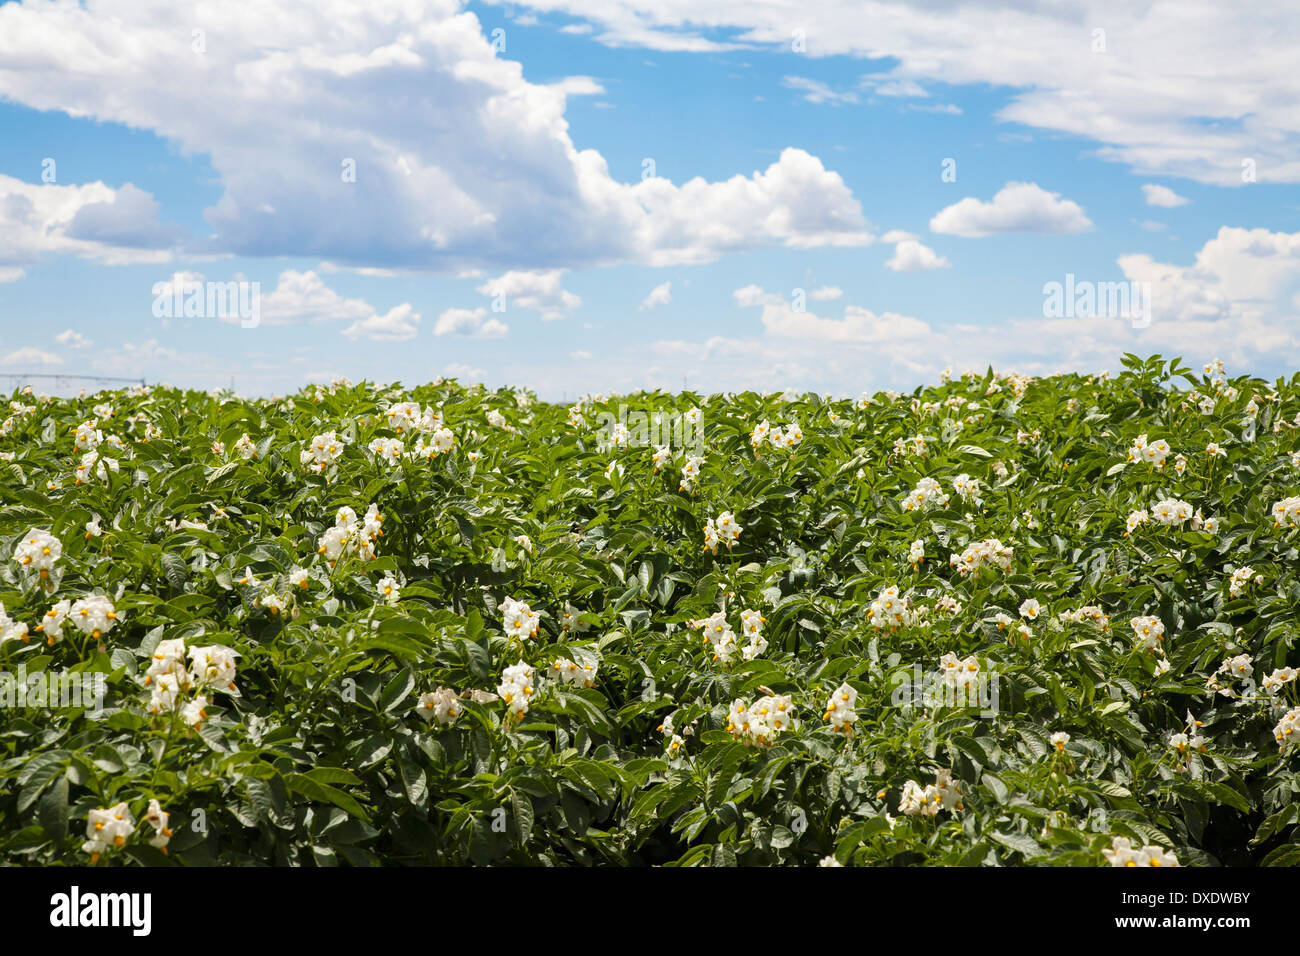 Flowering potato plants, Colorado, USA Stock Photo